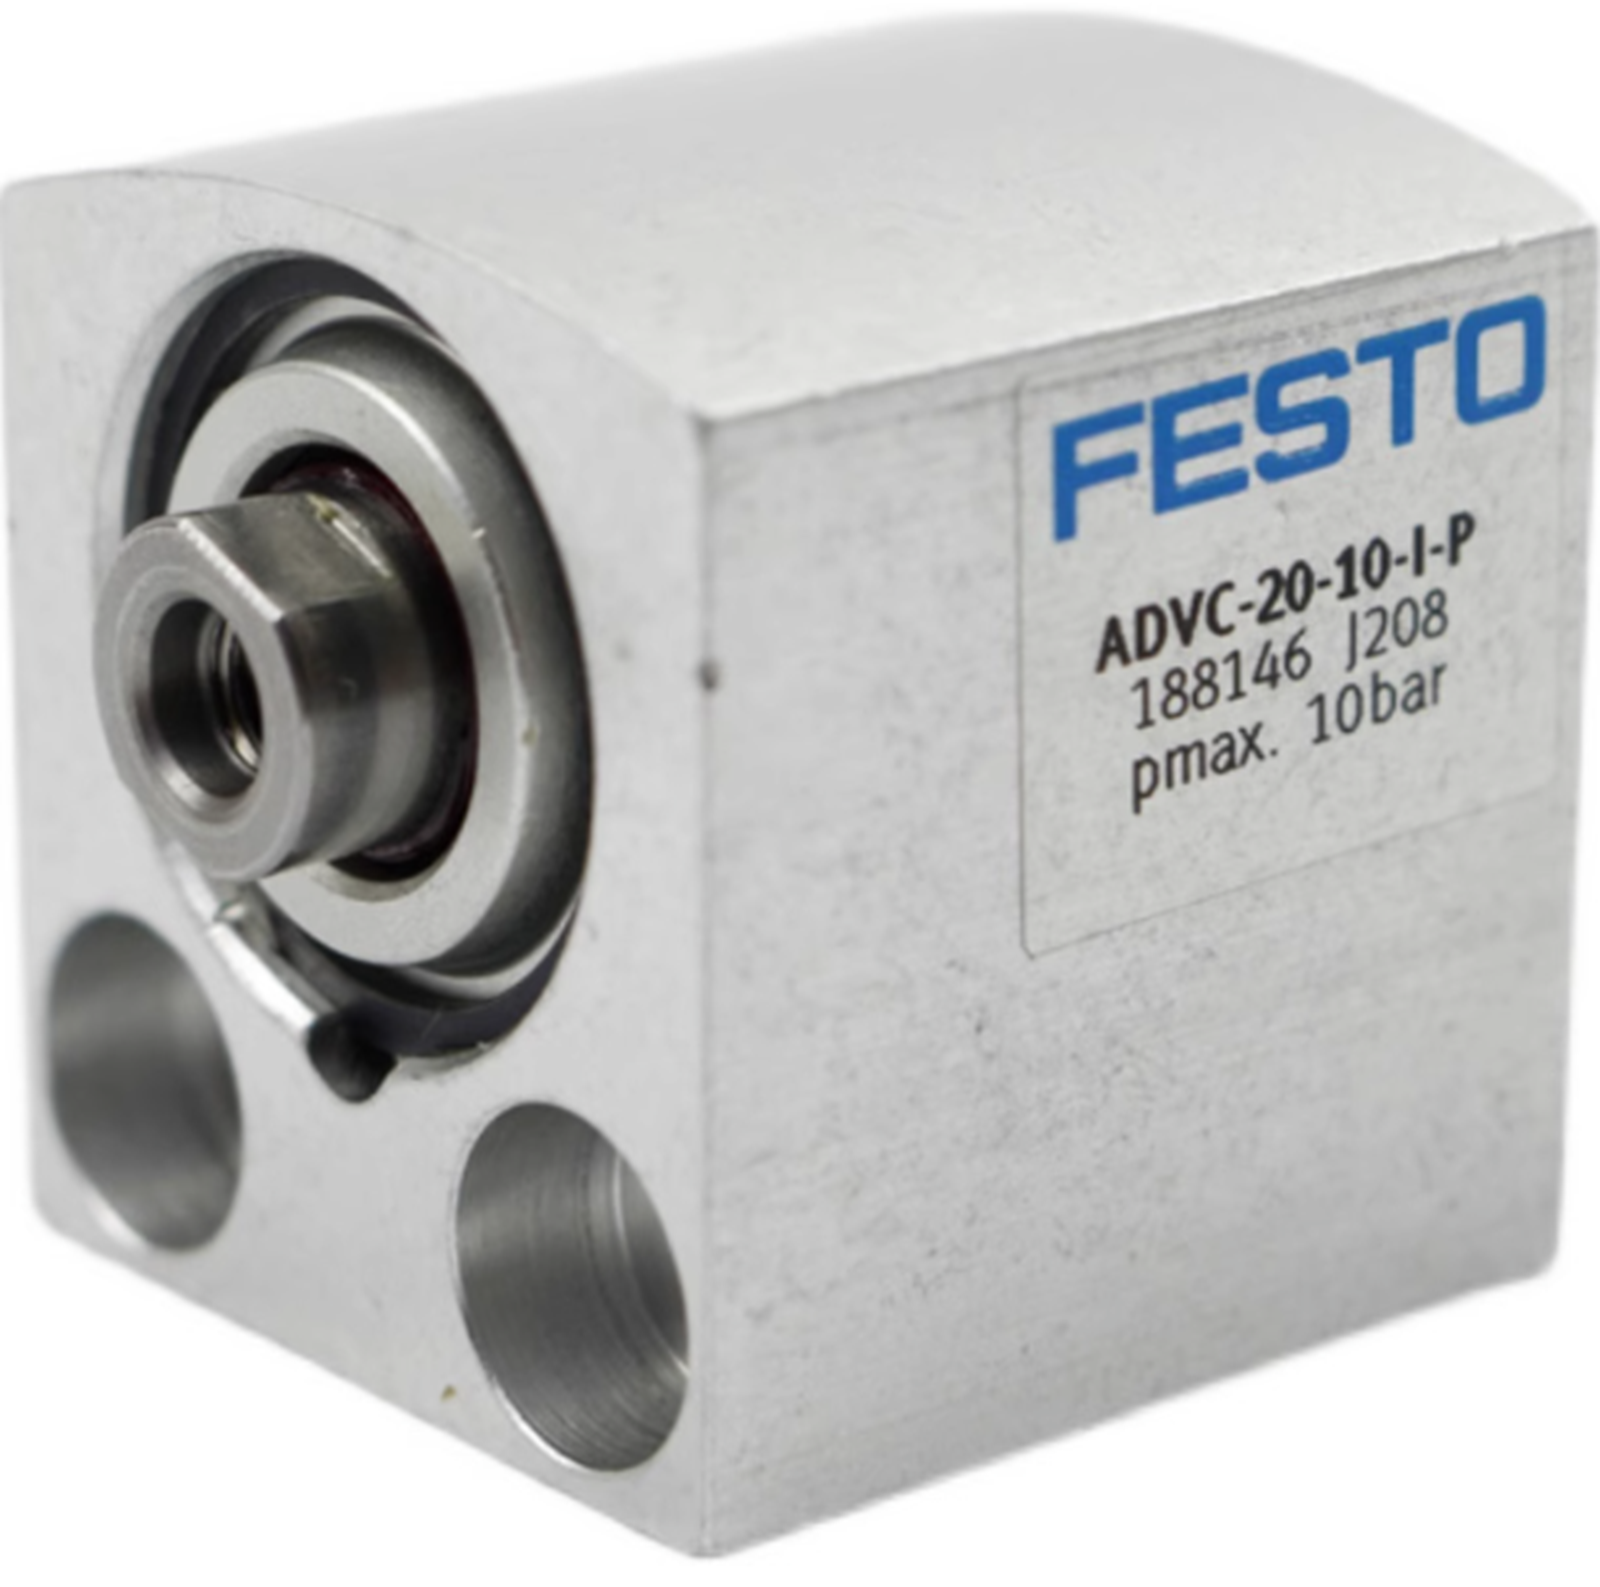 FESTO ADVC-20-10-I-P 188146 Pneumatic Cylinder